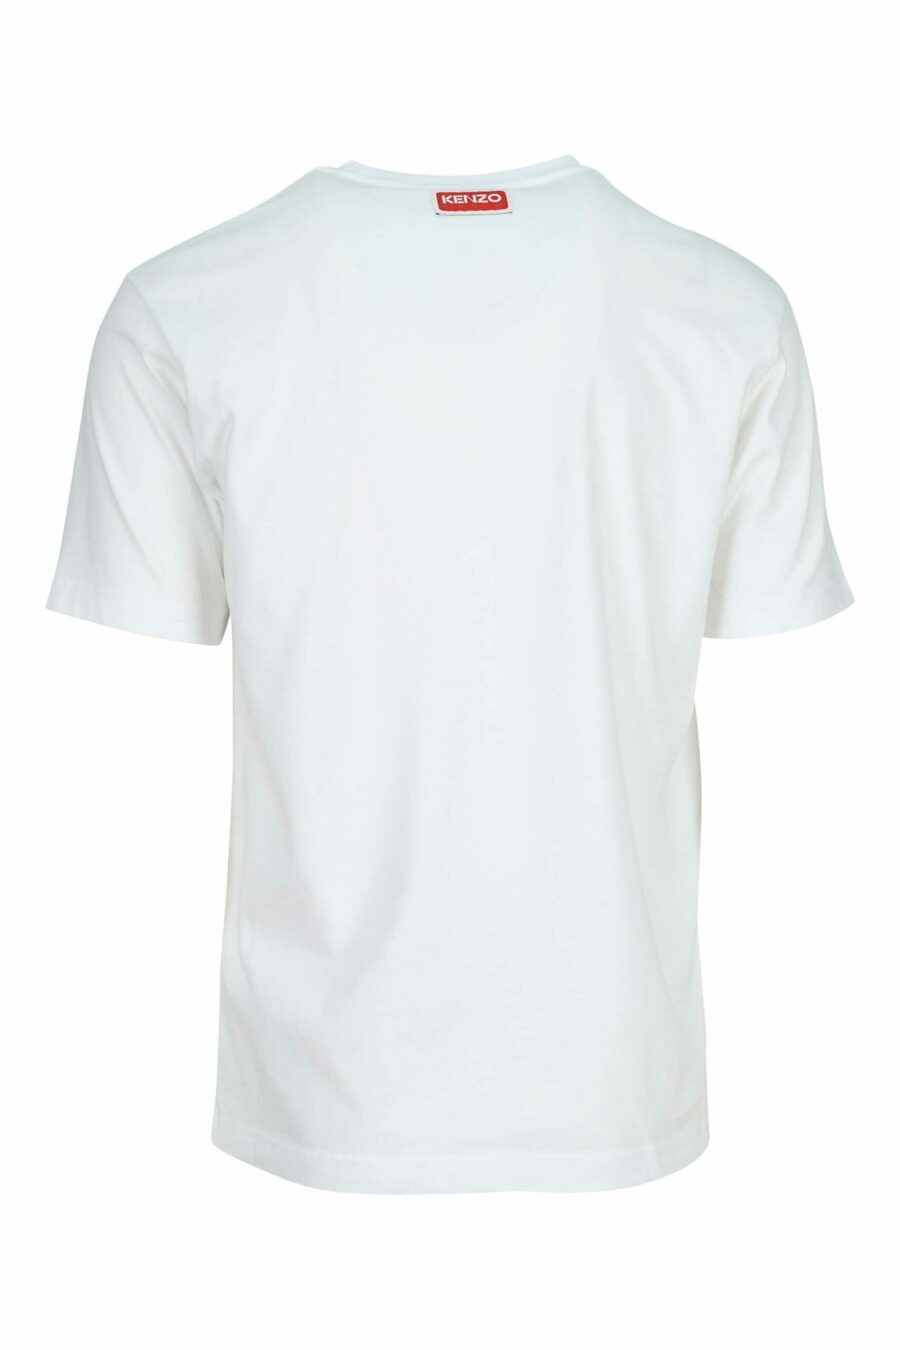 T-shirt branca com maxilogo de tigre multicolorido - 3612230625136 1 scaled